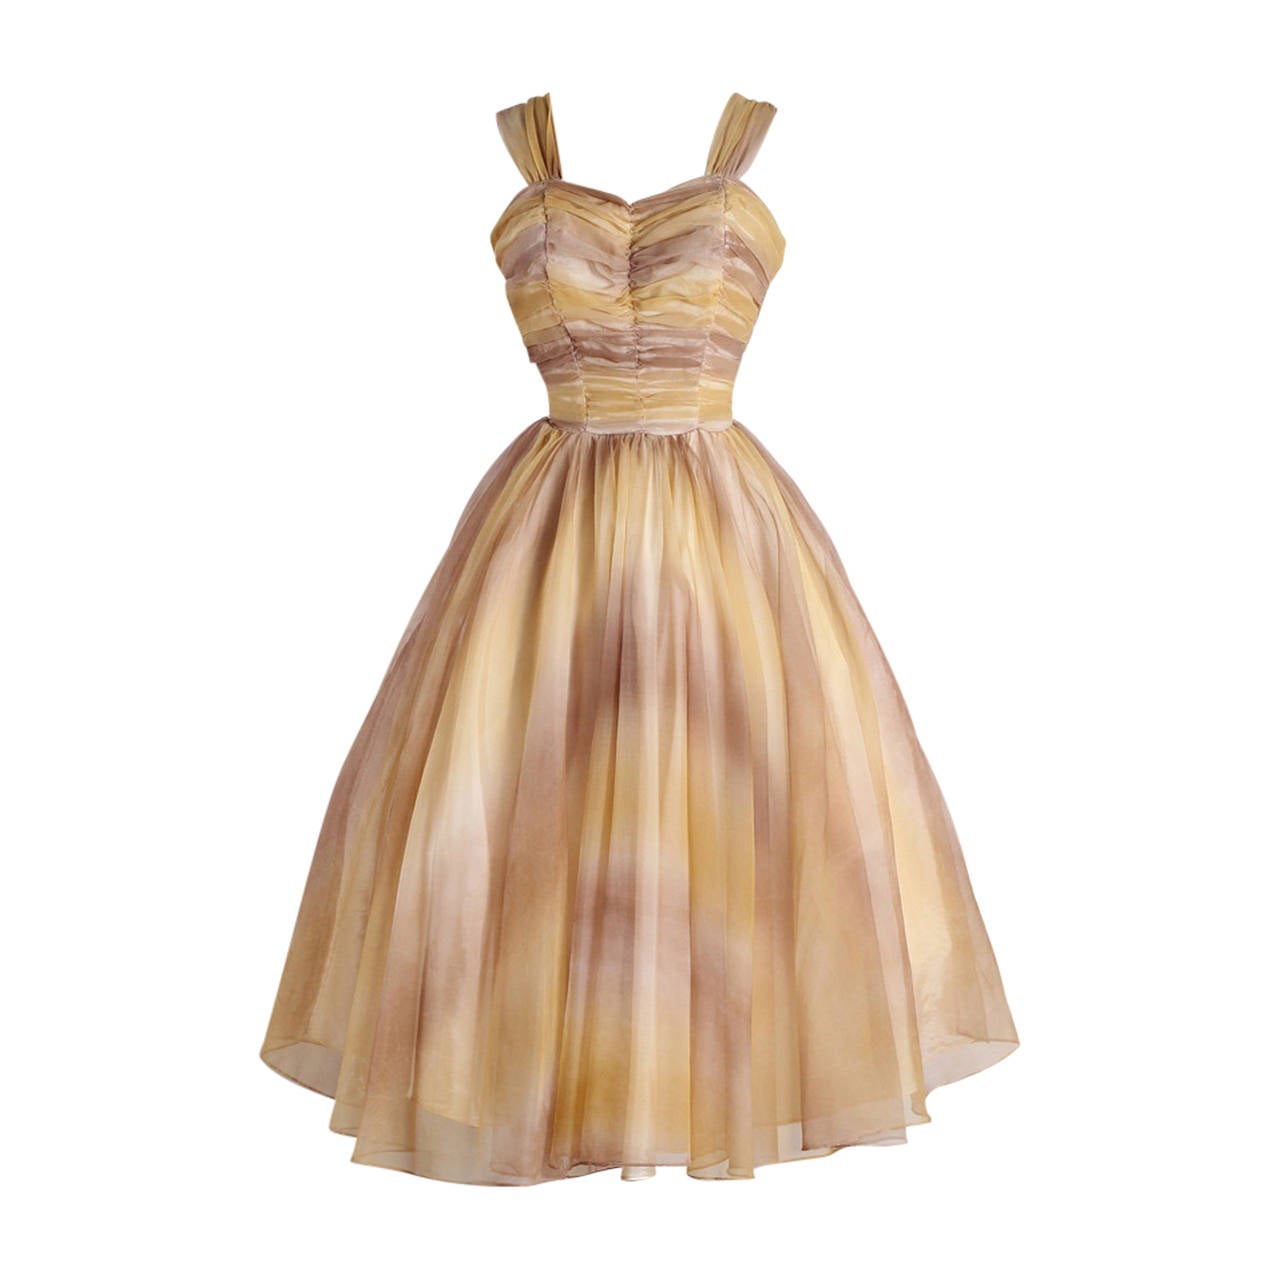 Vintage 1950s Ombre Chiffon Party Dress For Sale